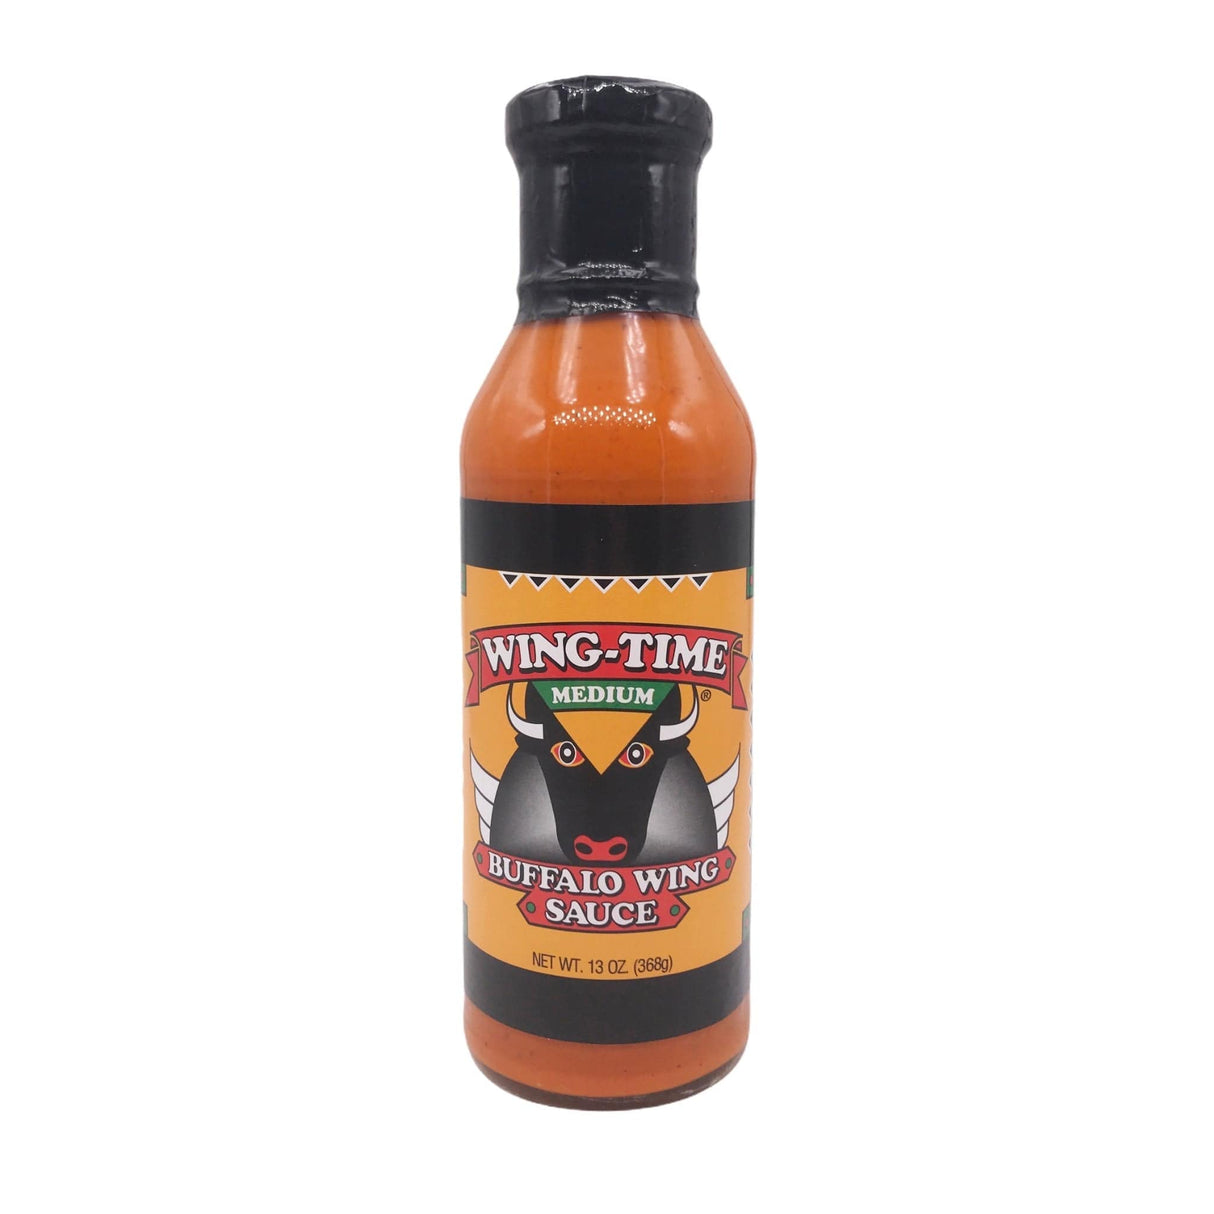 Wing-Time Medium Buffalo Wing Sauce - hot sauce market & more